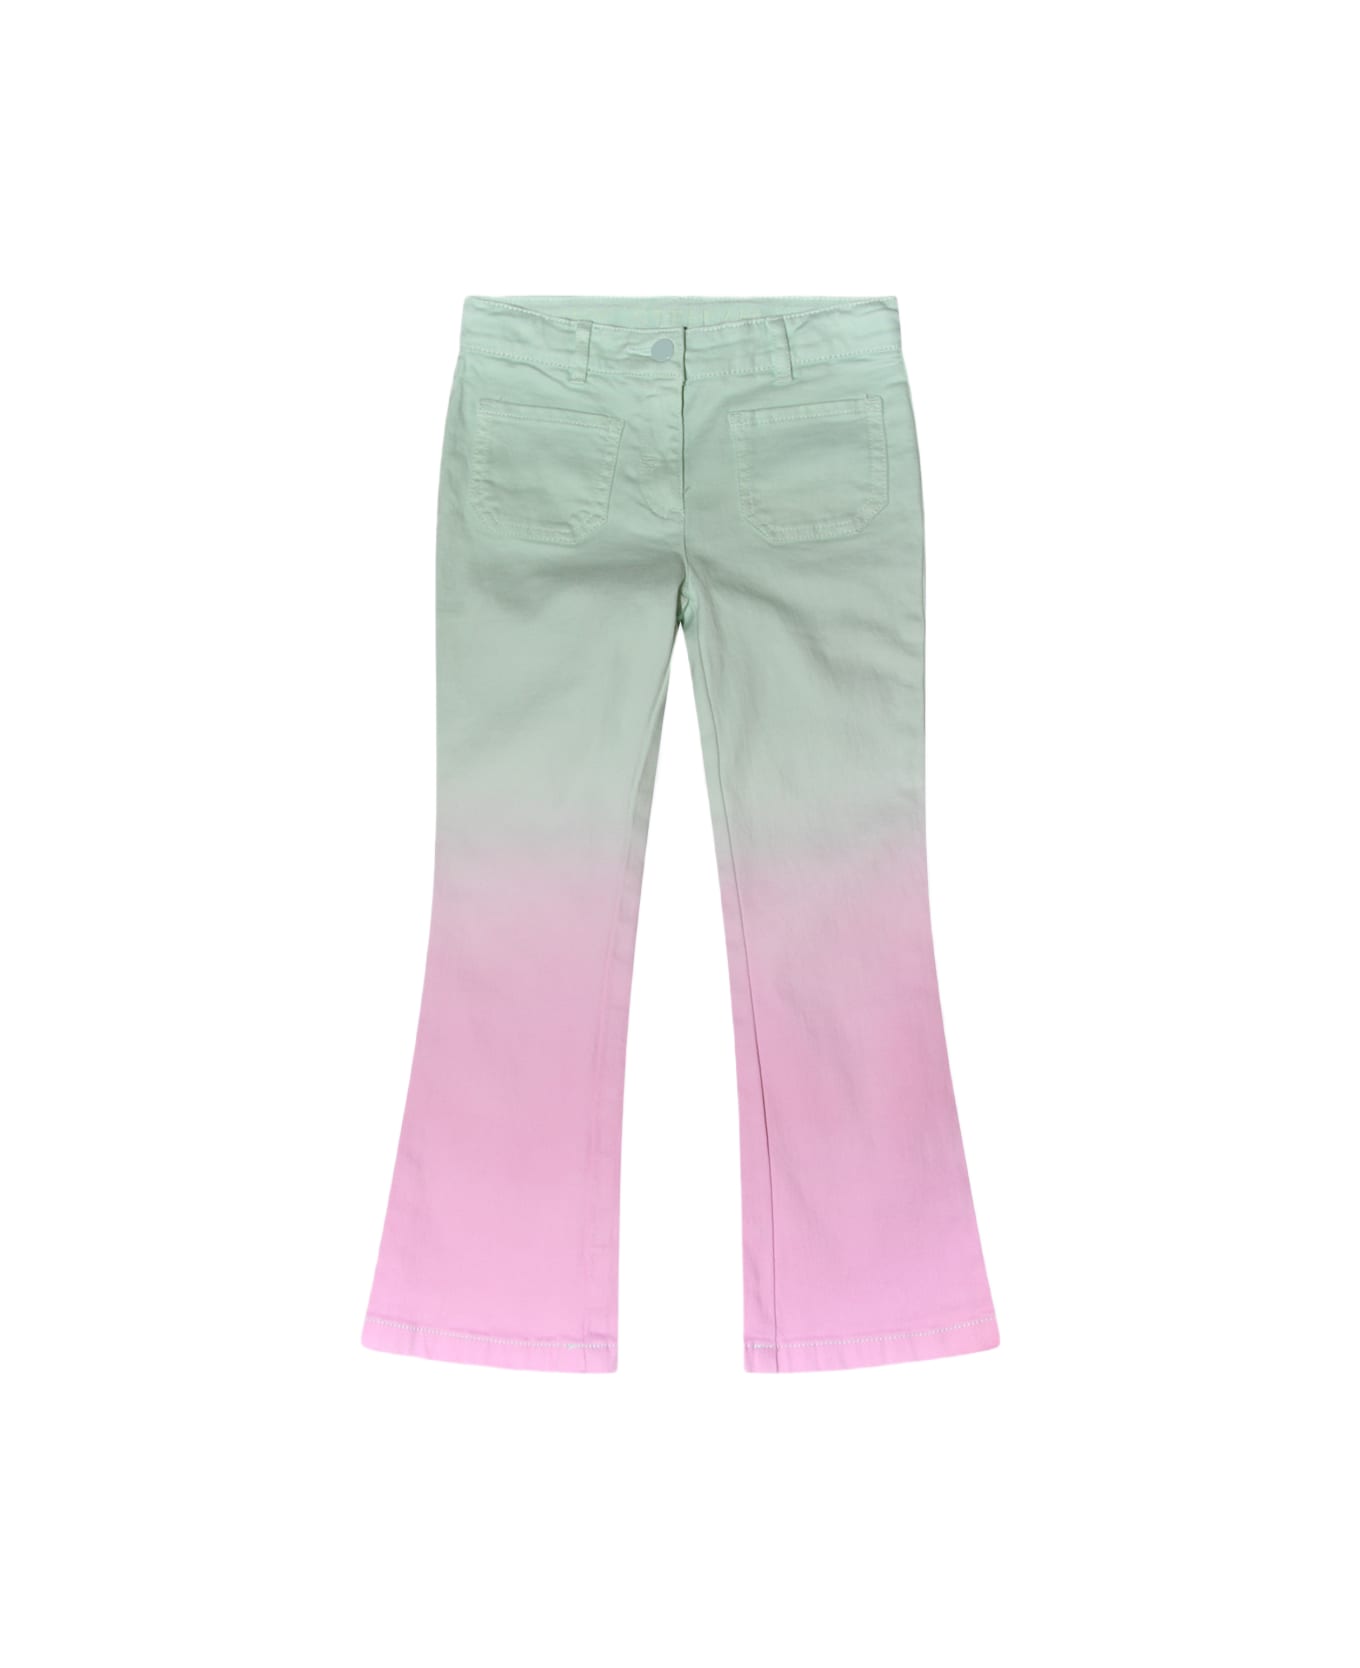 Stella McCartney Multicolor Cotton Denim Jeans - COLOURFUL